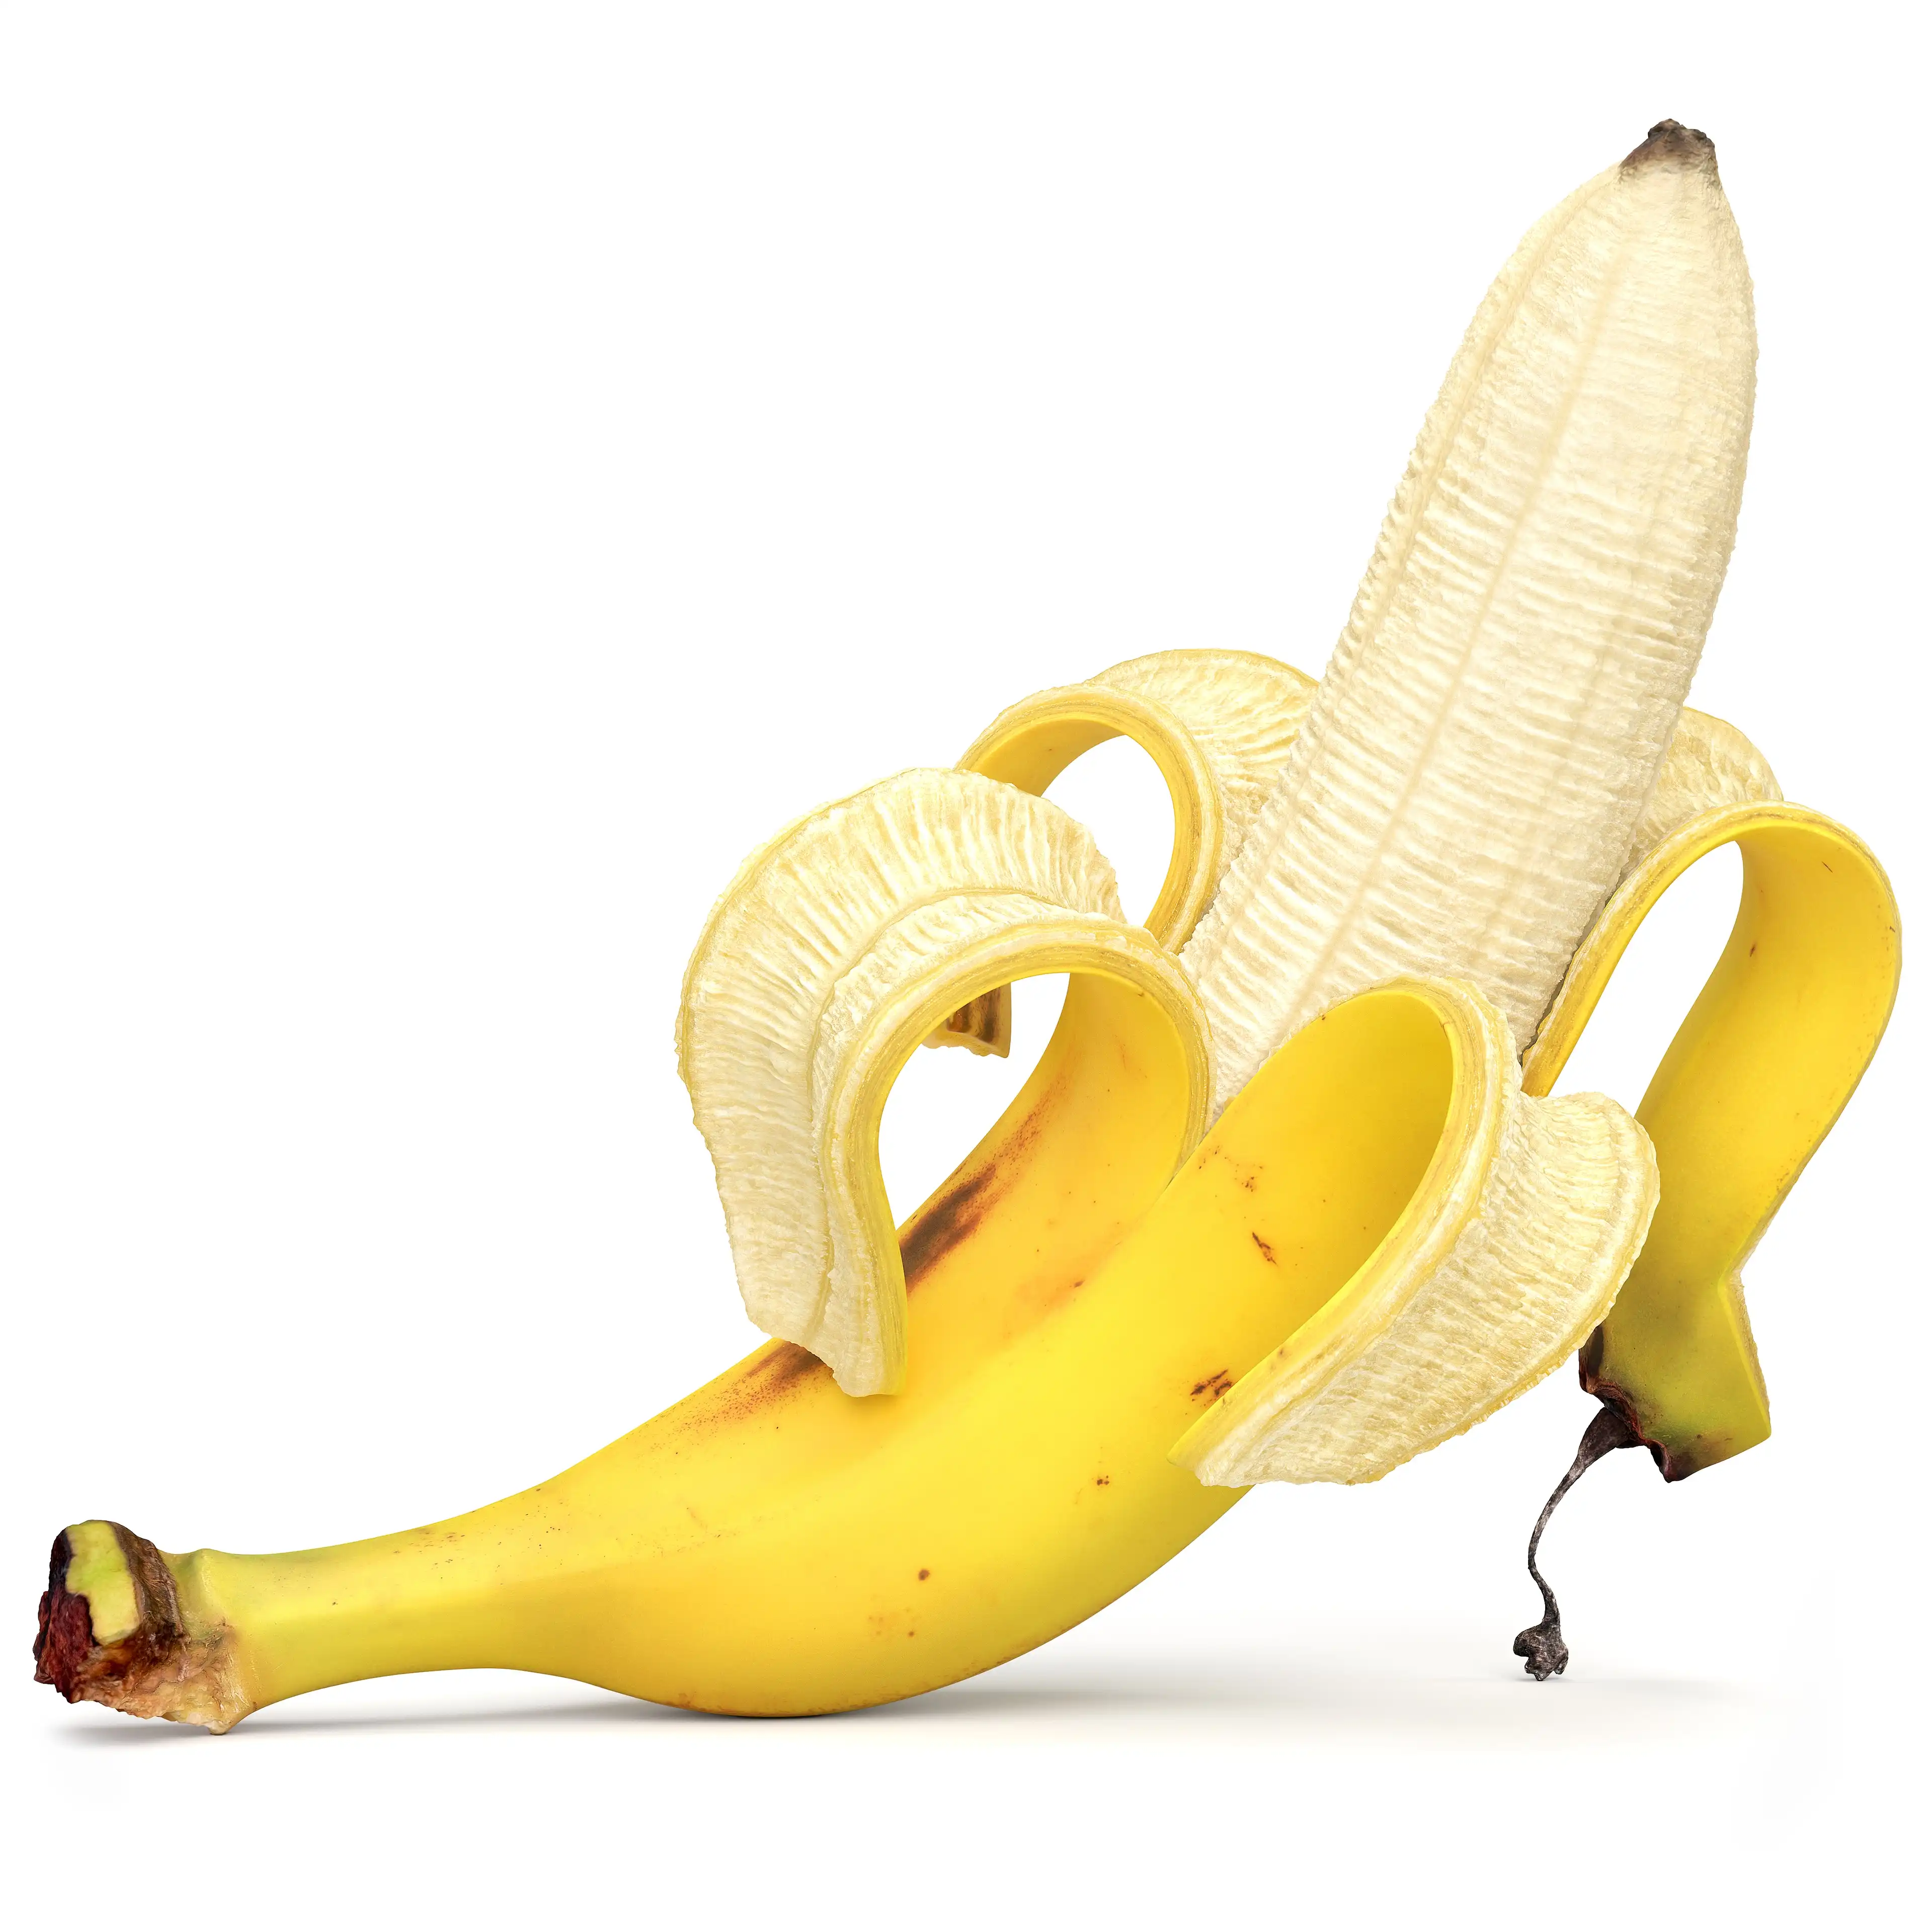 Scanned photorealistic peelable banana 3D model studio render on white background.